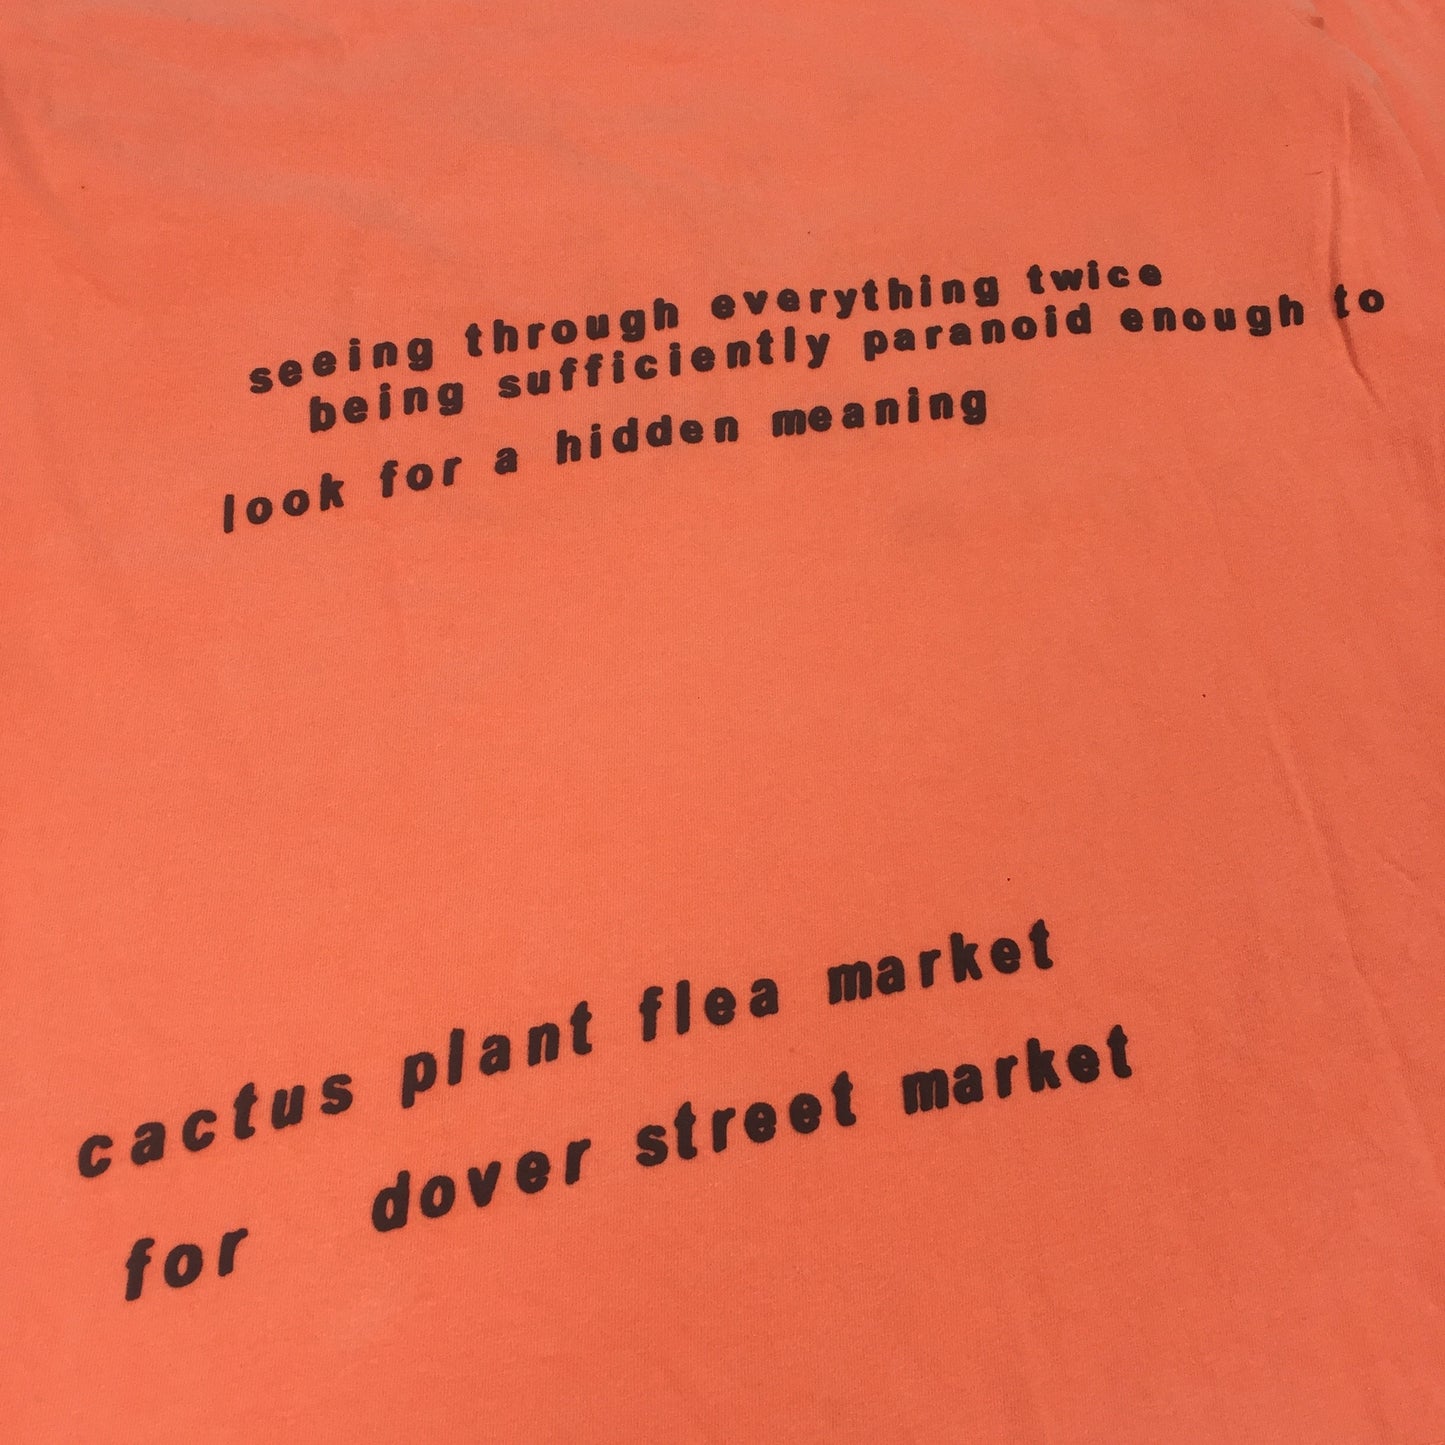 Cactus Plant Flea Market x DSM - Orange 'Seeing Double' T-Shirt